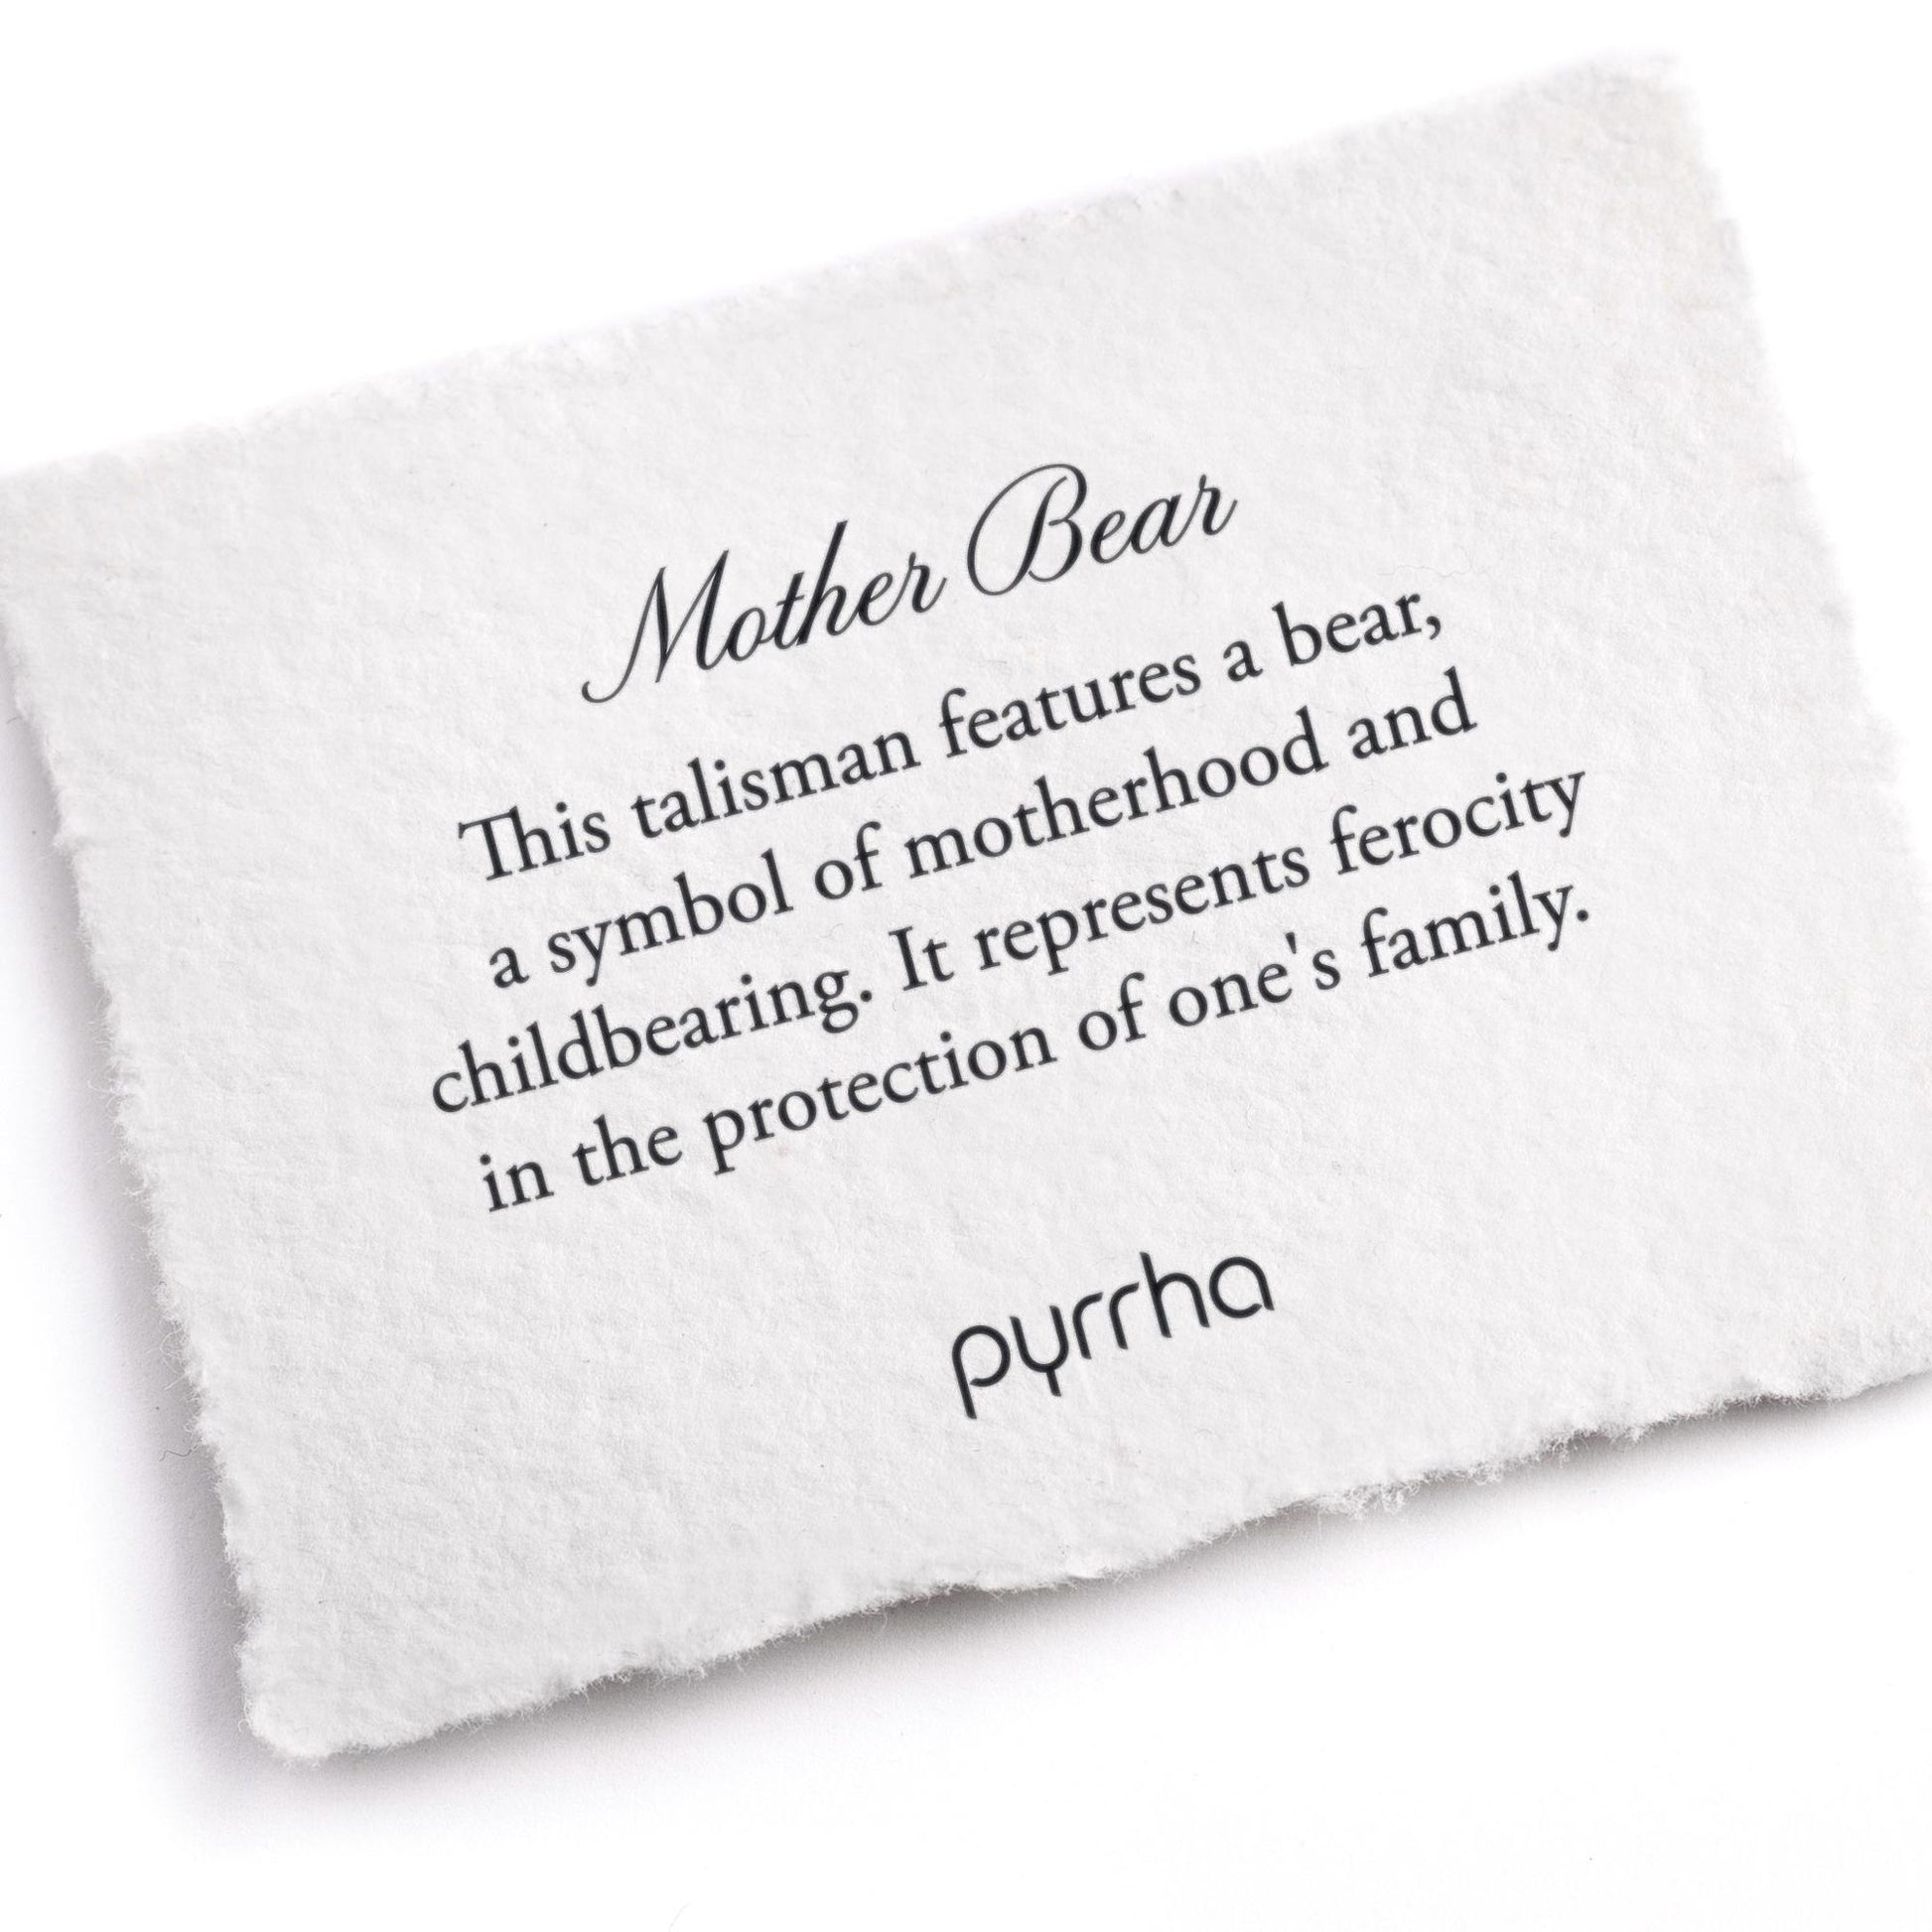 Mother Bear Pyrrha Meaning